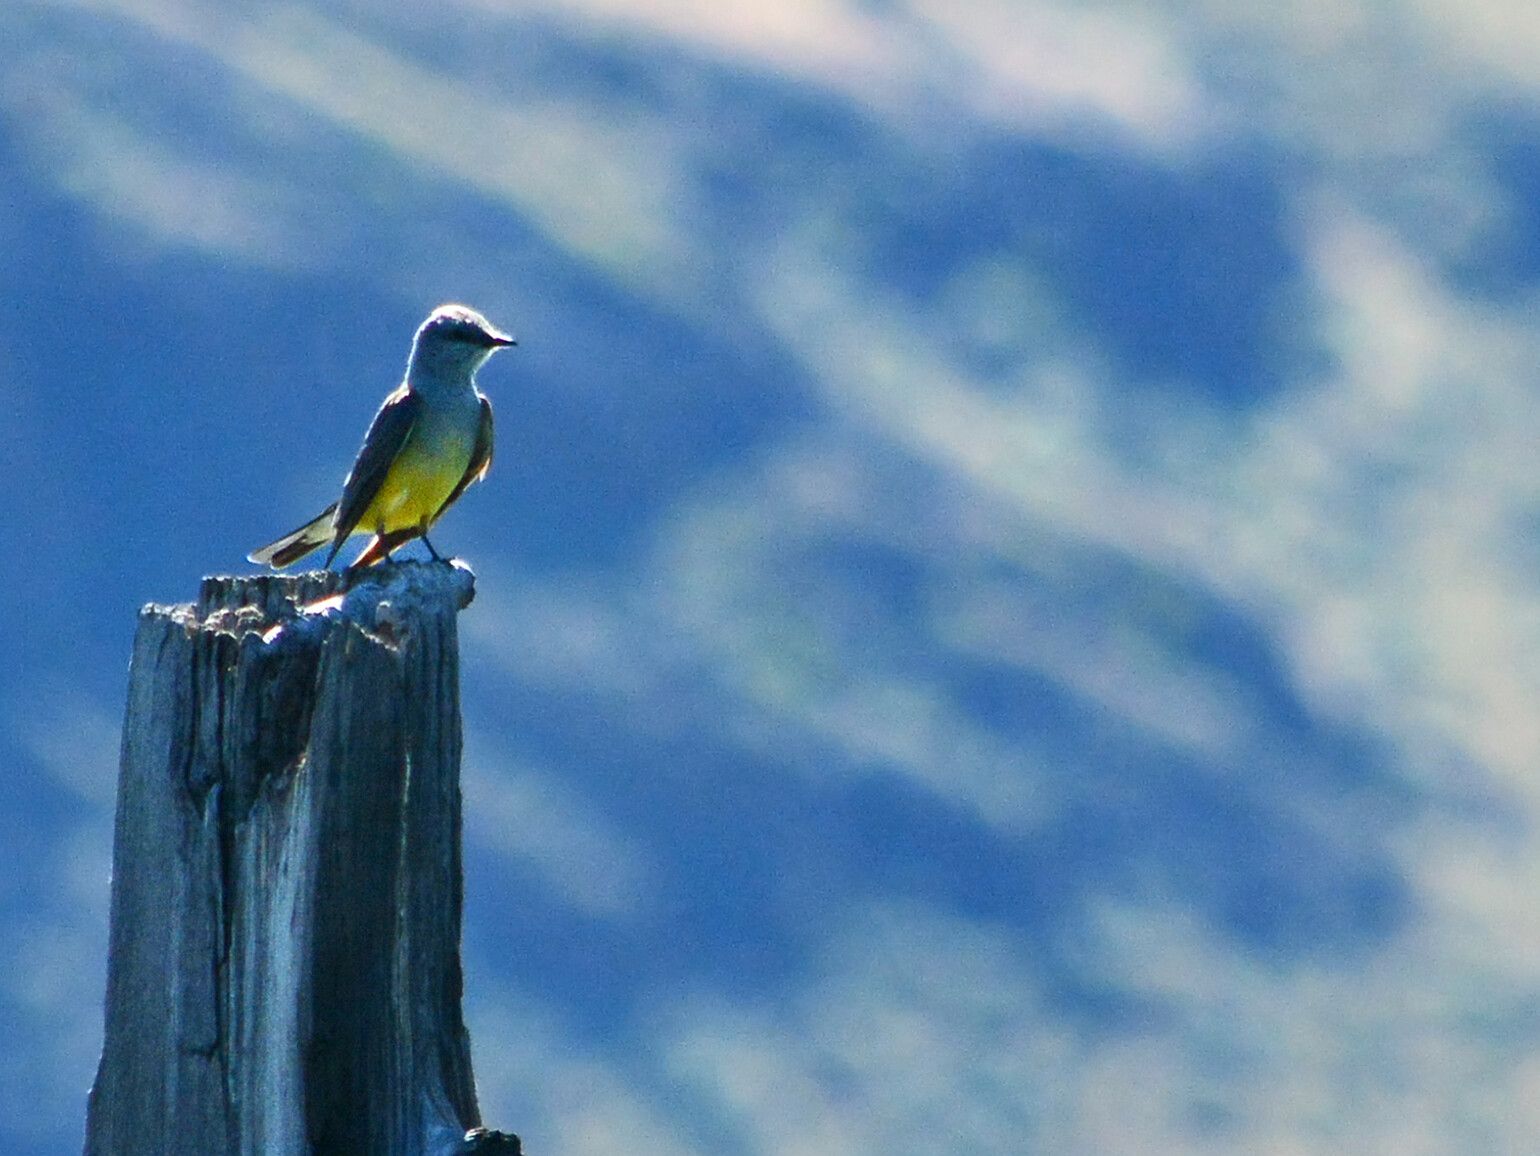 The territorial western kingbird keeps a watchful eye over Steelhead Park from his high perch.